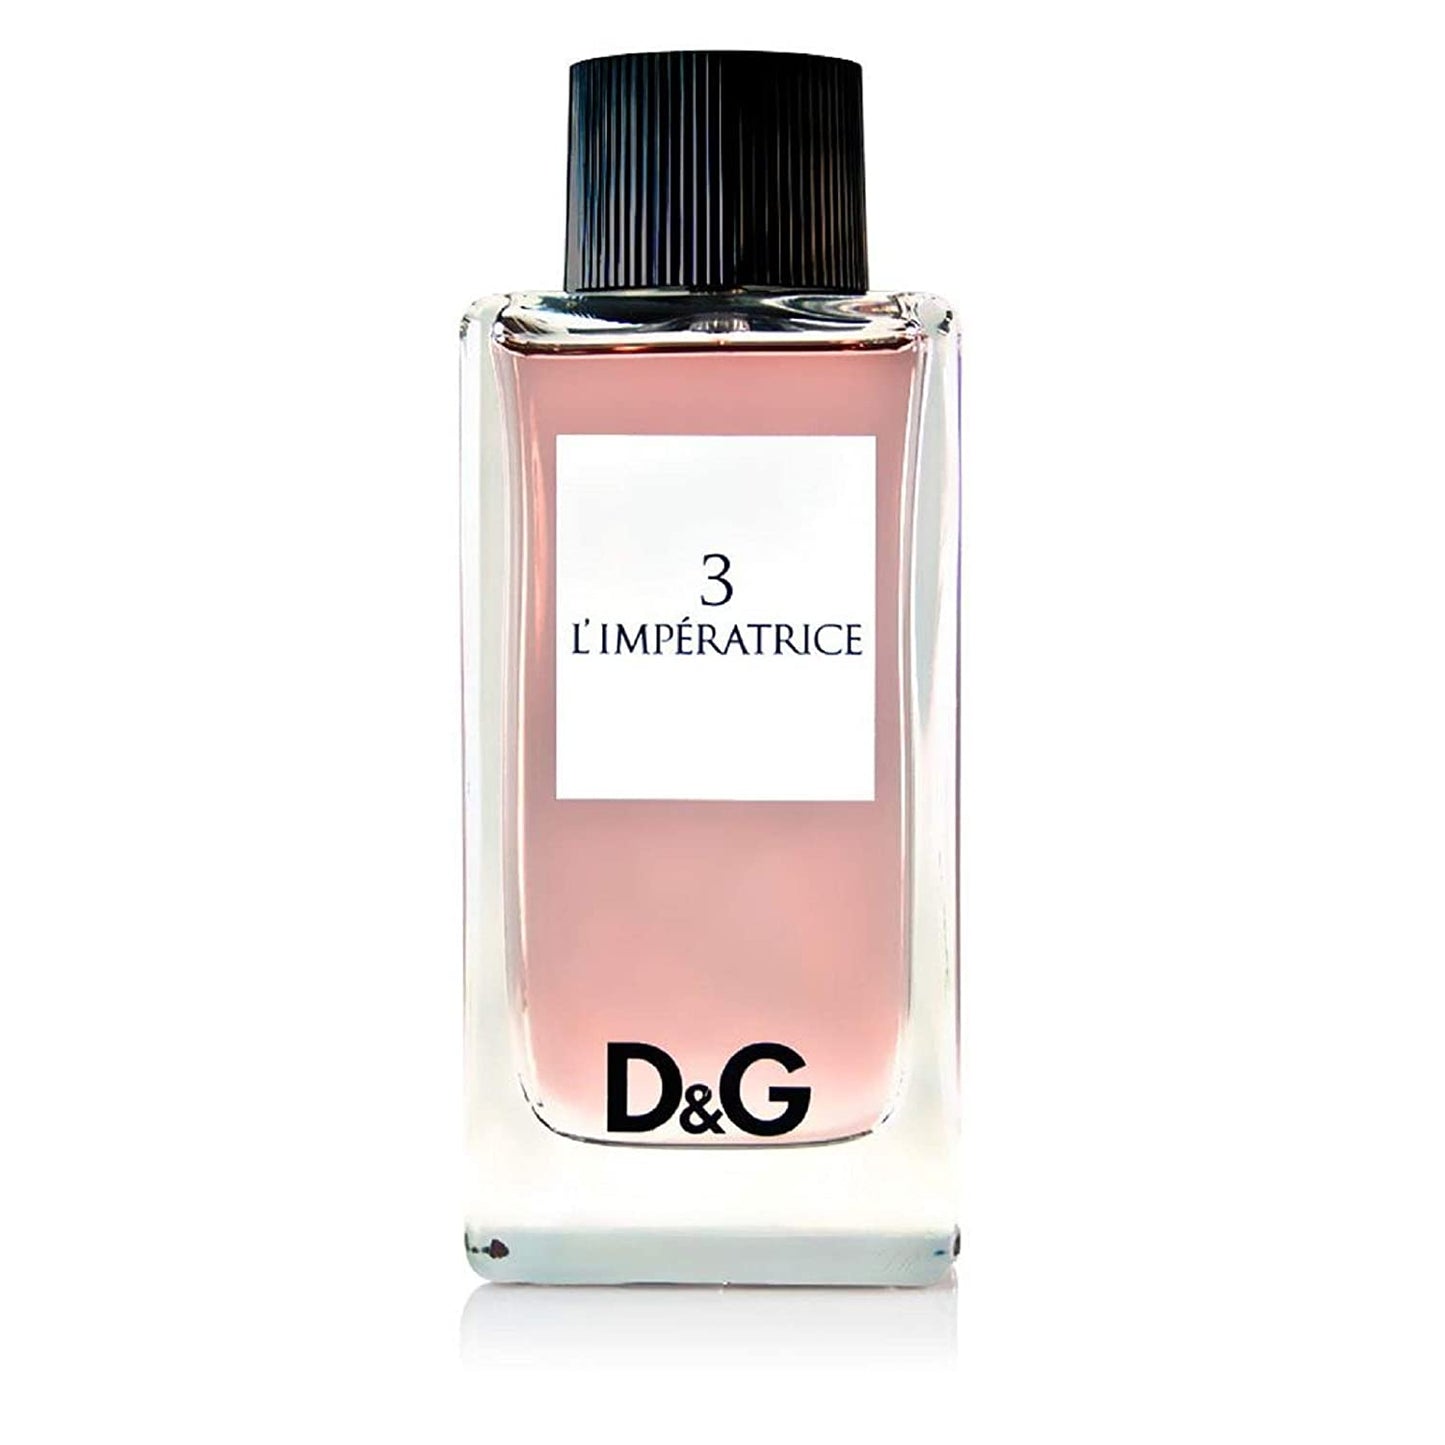 Dolce&Gabbana - L'Imperatrice 3 EDT 100ml